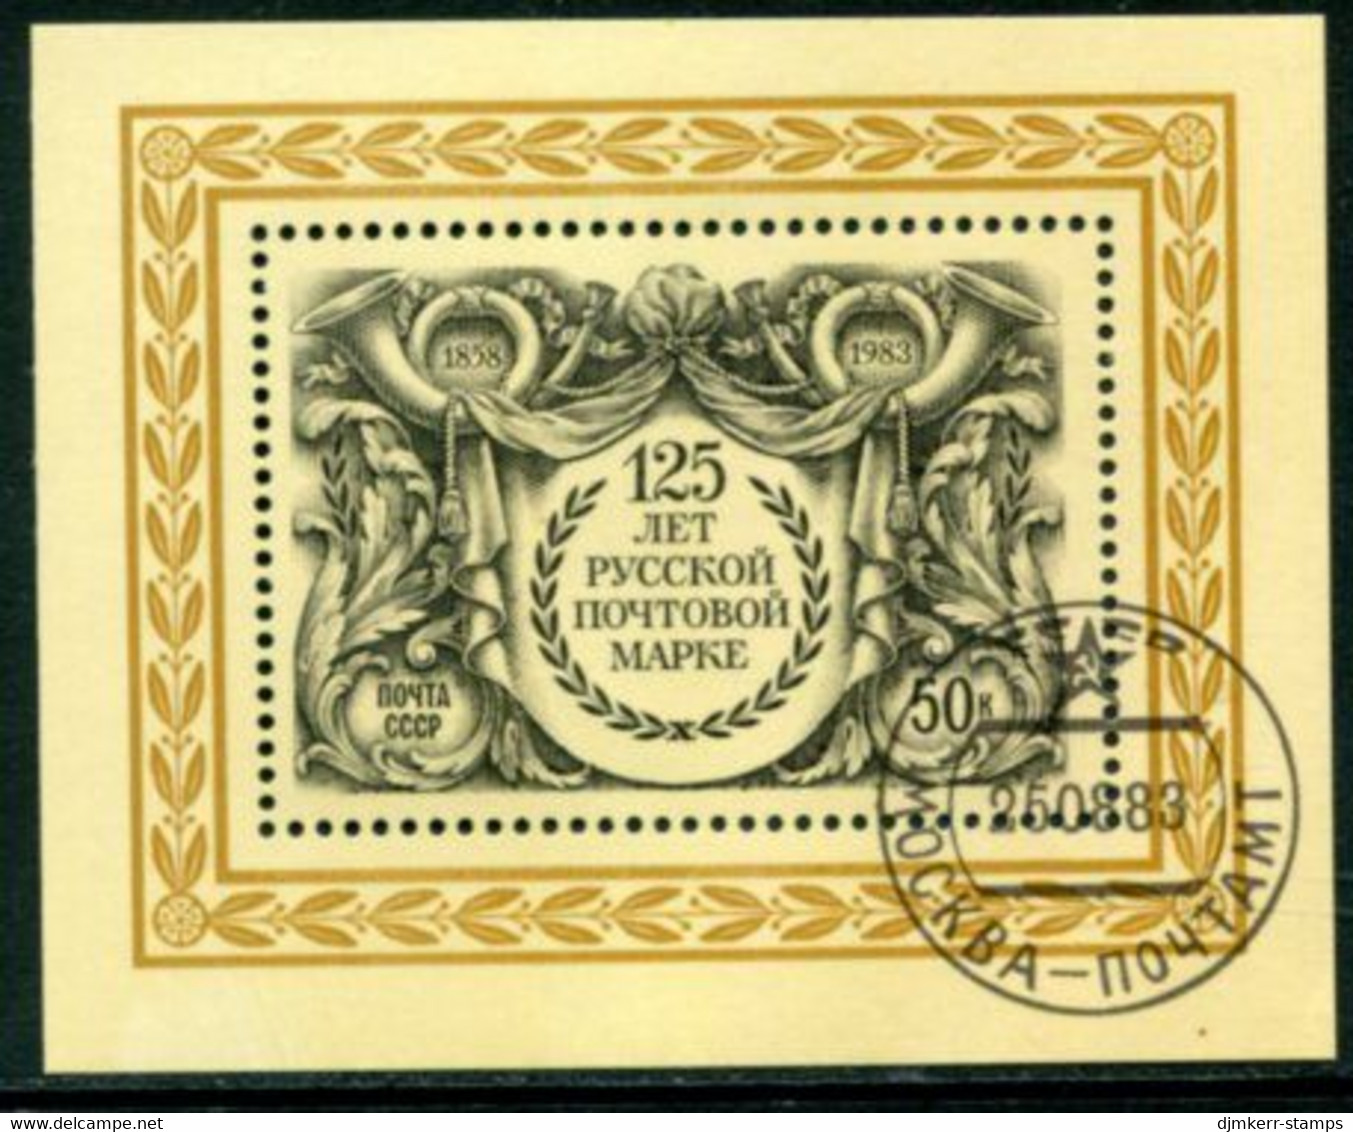 SOVIET UNION 1983 Stamp Anniversary Block Used.  Michel Block 167 - Used Stamps